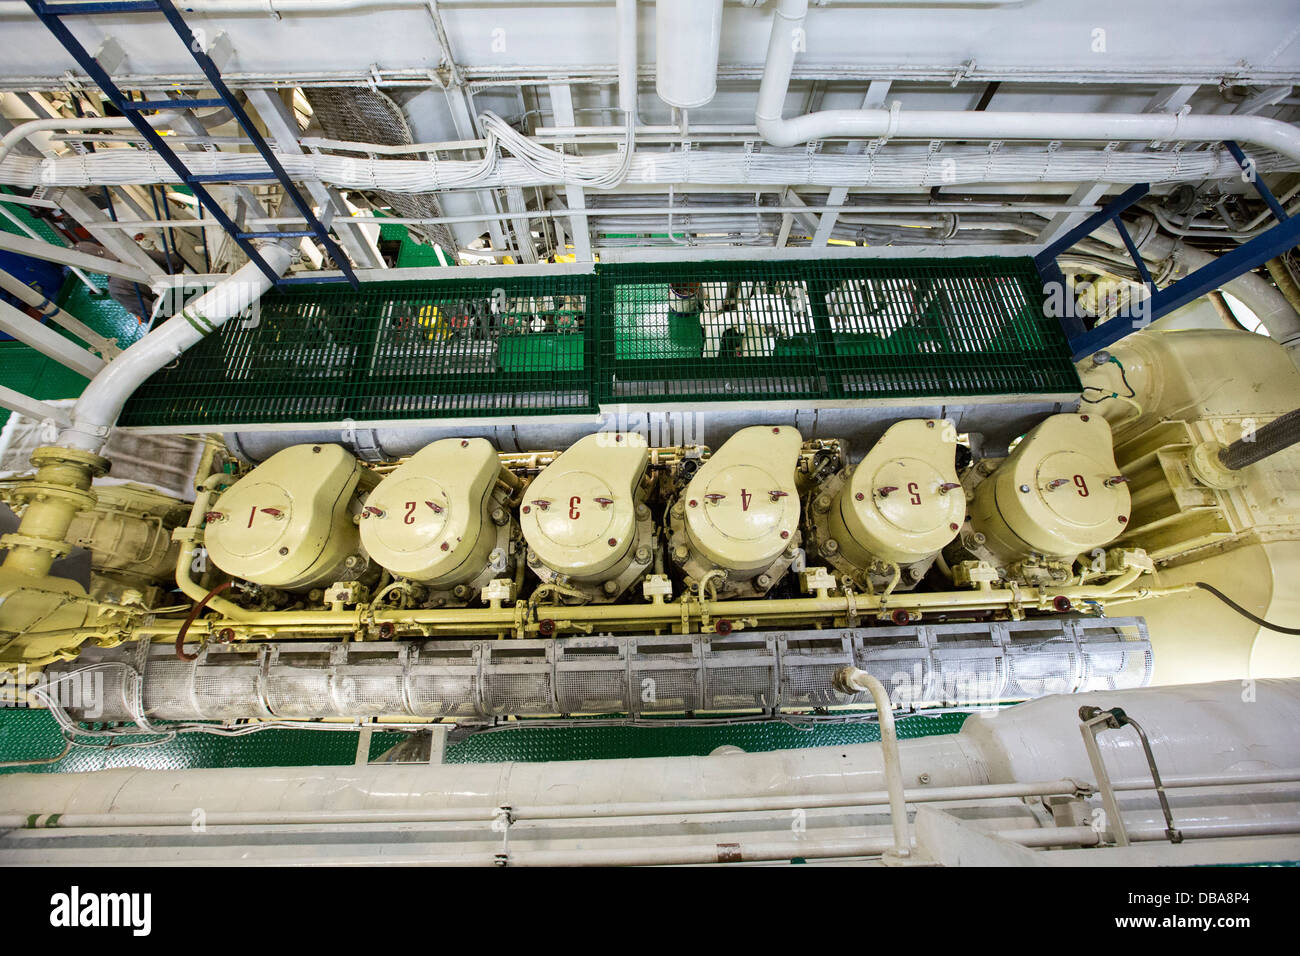 La sala del motore sul russo nave di ricerca, AkademiK Sergey Vavilov. Foto Stock